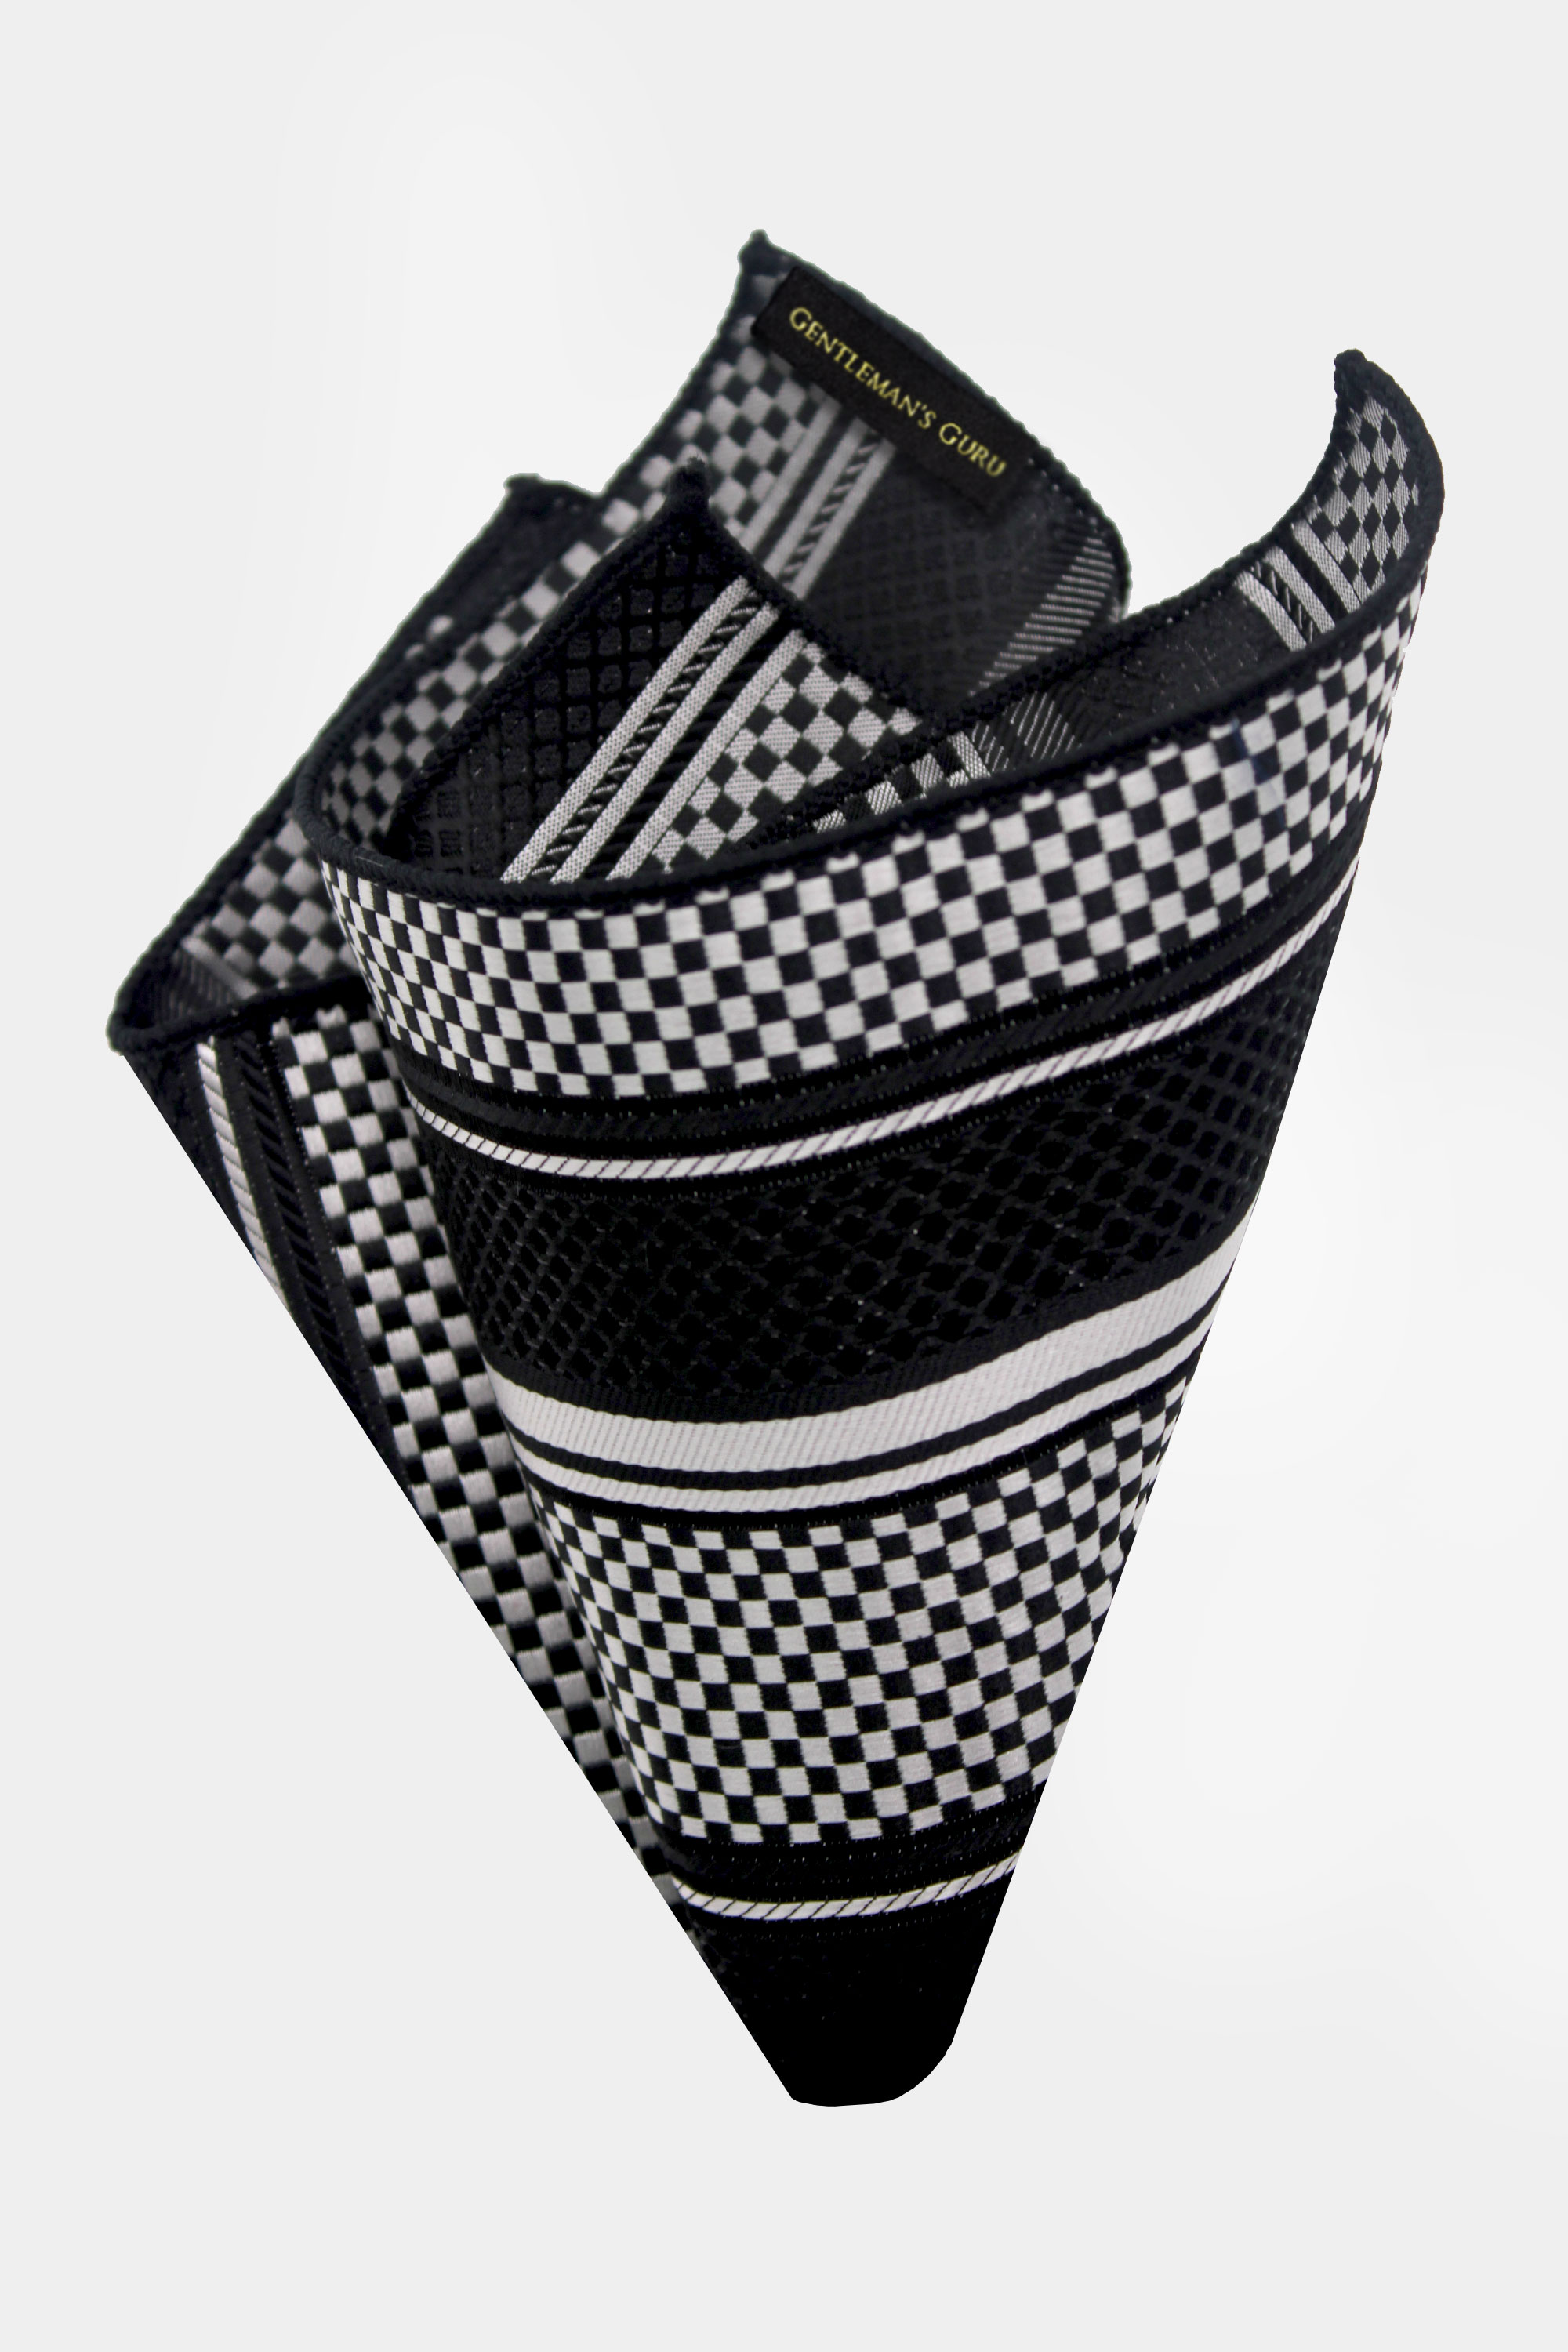 Black-and-White-Striped-Pocket-Square-Handkerchief-from-Gentlemansguru.com